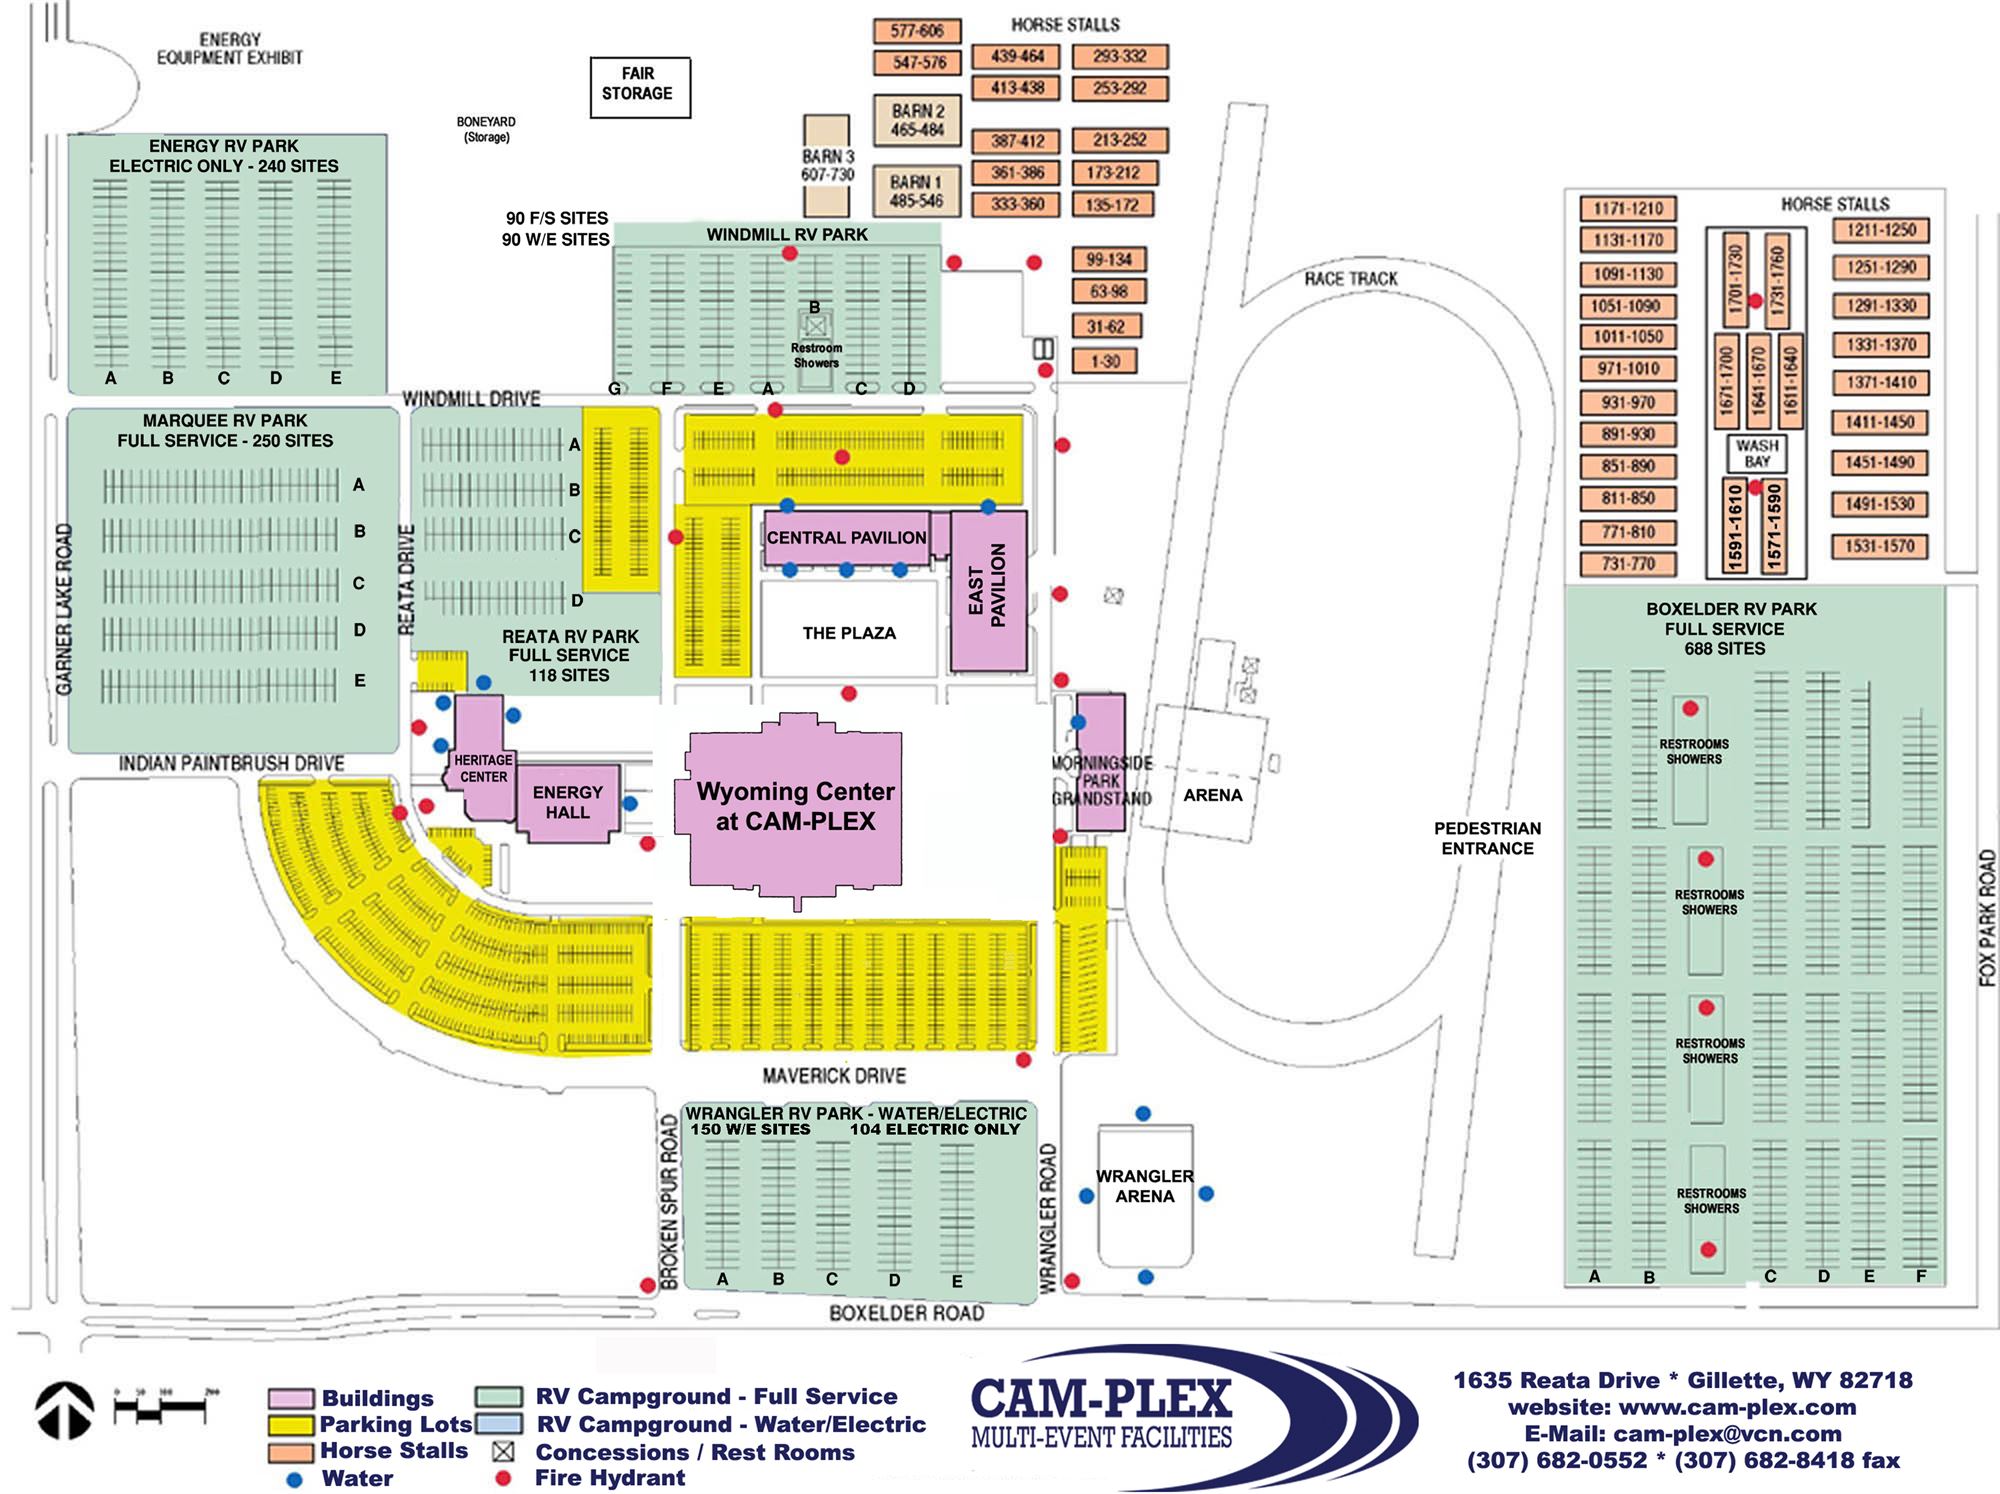 A map of the Cam-Plex Multi-Event Facilities.